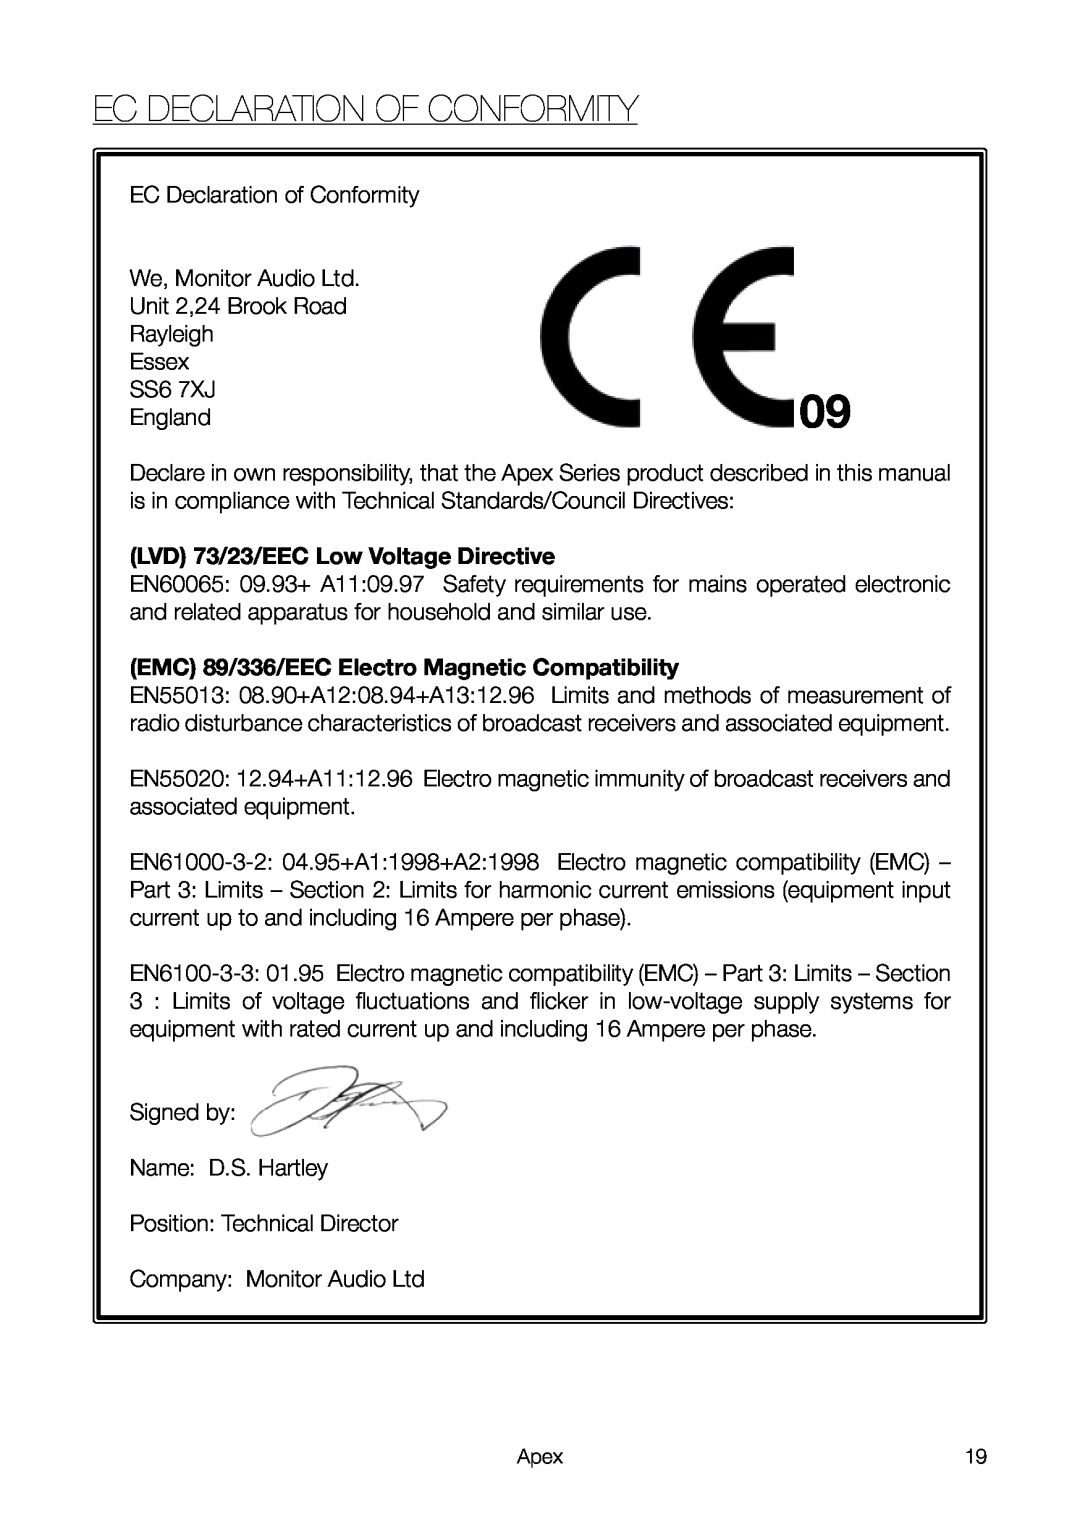 Apex Digital 10 owner manual EC Declaration of Conformity, LVD 73/23/EEC Low Voltage Directive 